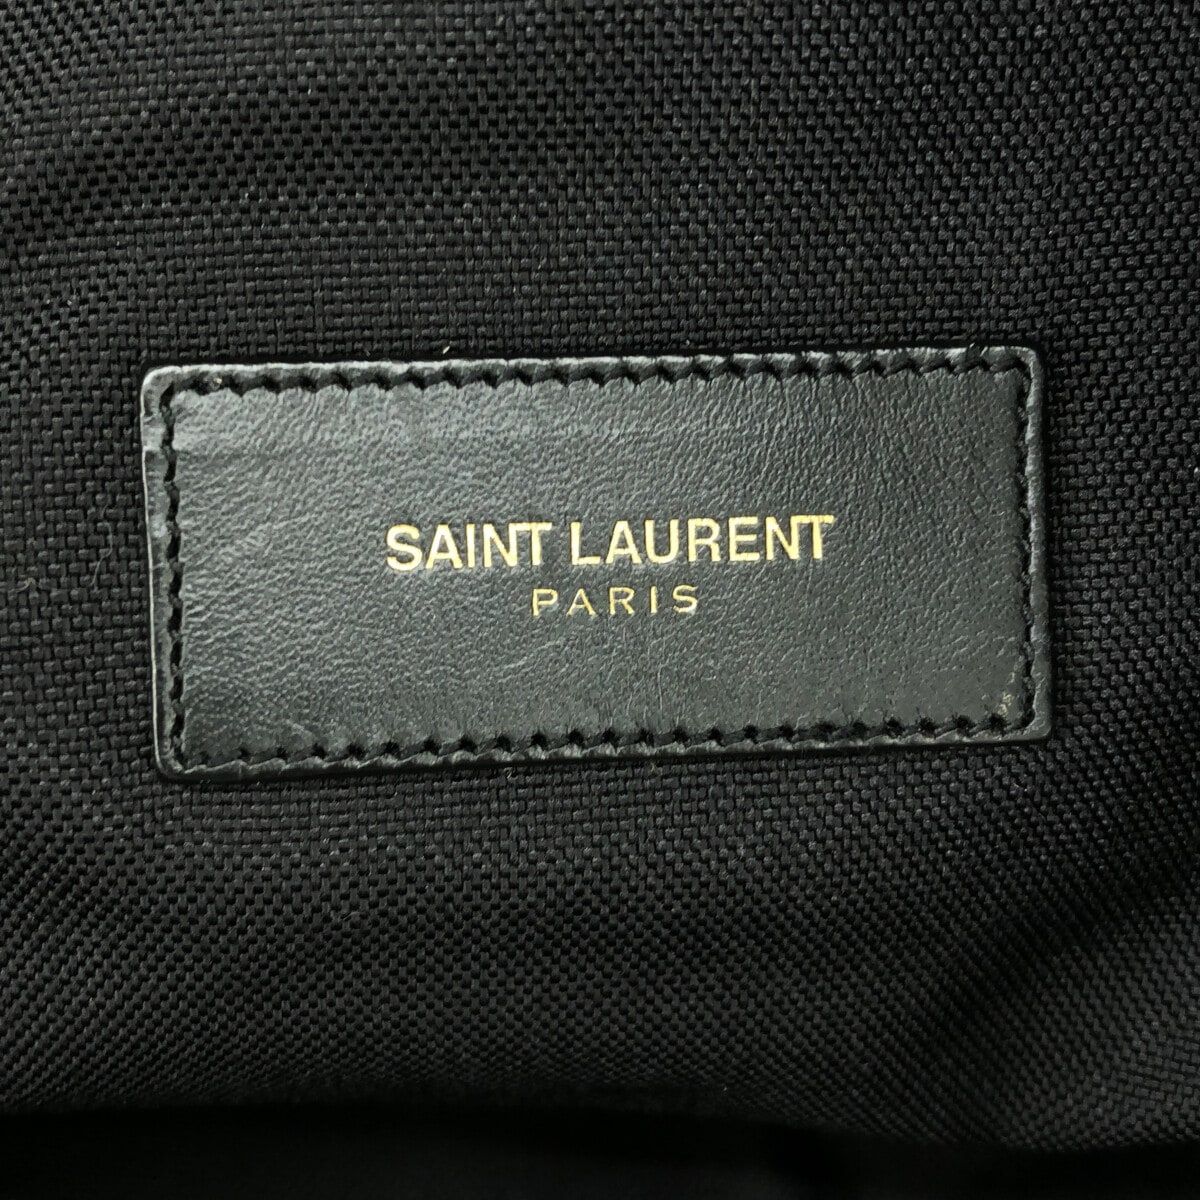 SAINT LAURENT PARIS(サンローランパリ) リュックサック ハンティングロックサック 342609 黒 ナイロン×レザー - メルカリ